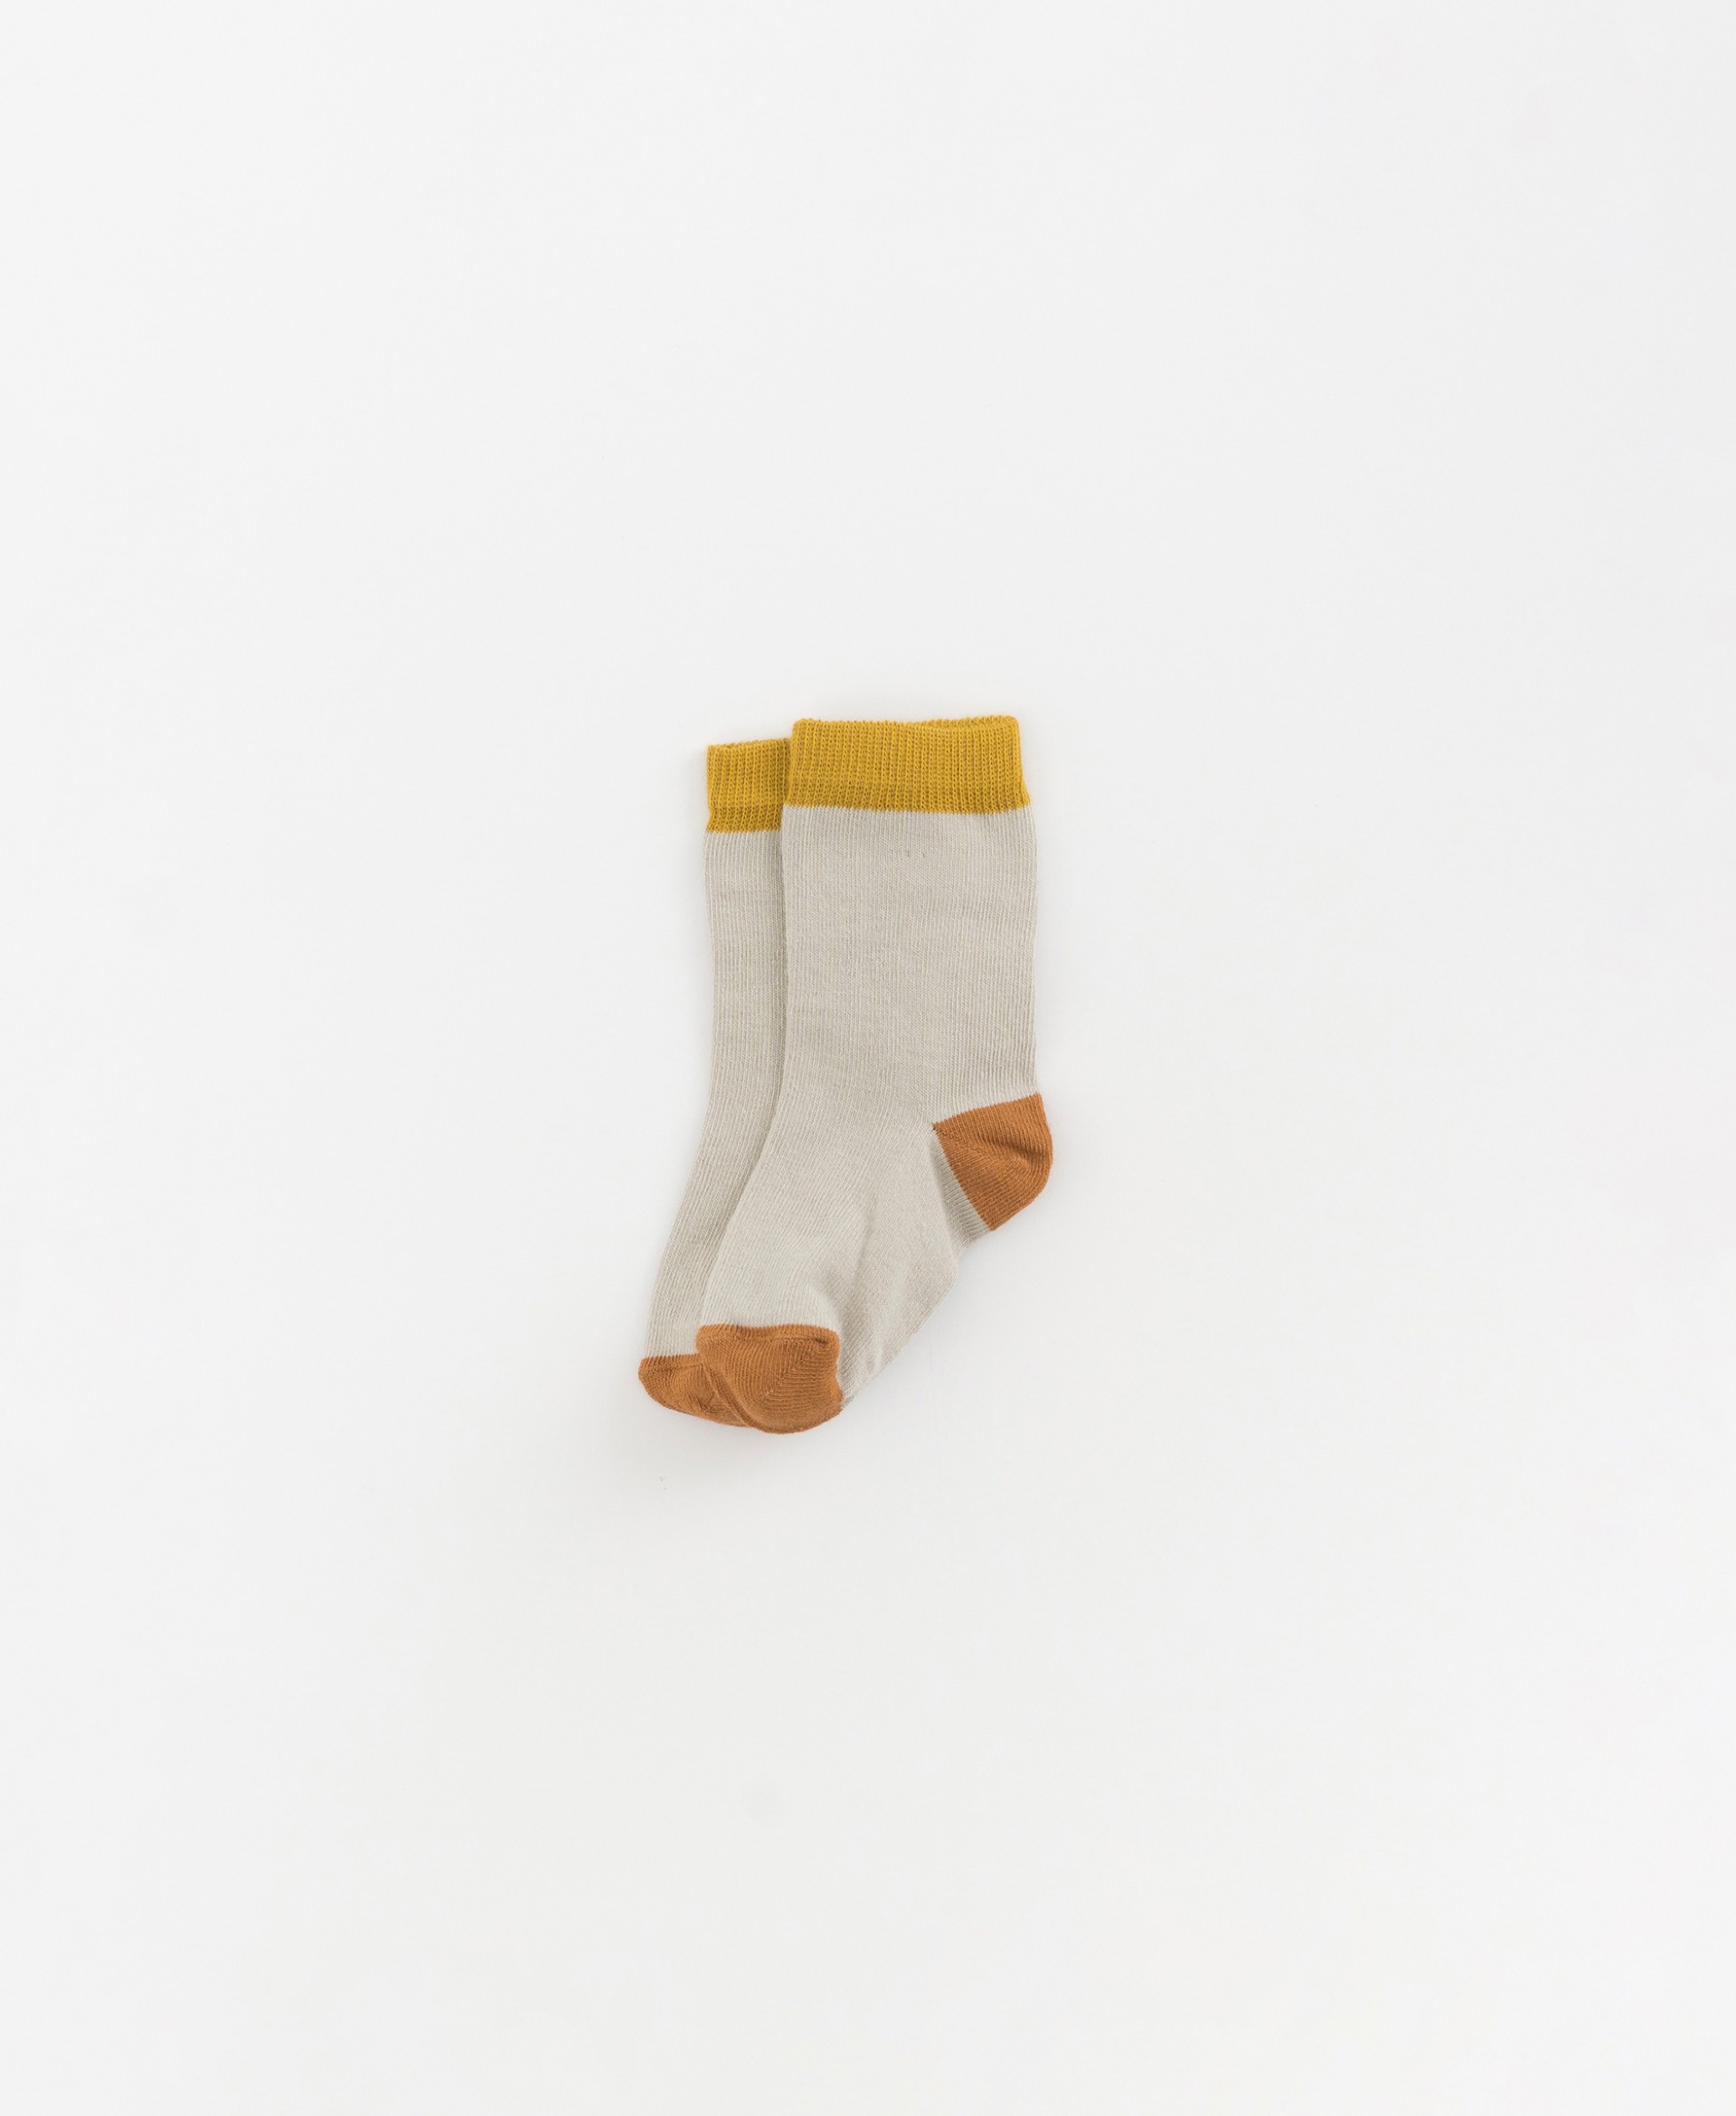 Socks in contrasting colors | Organic Care